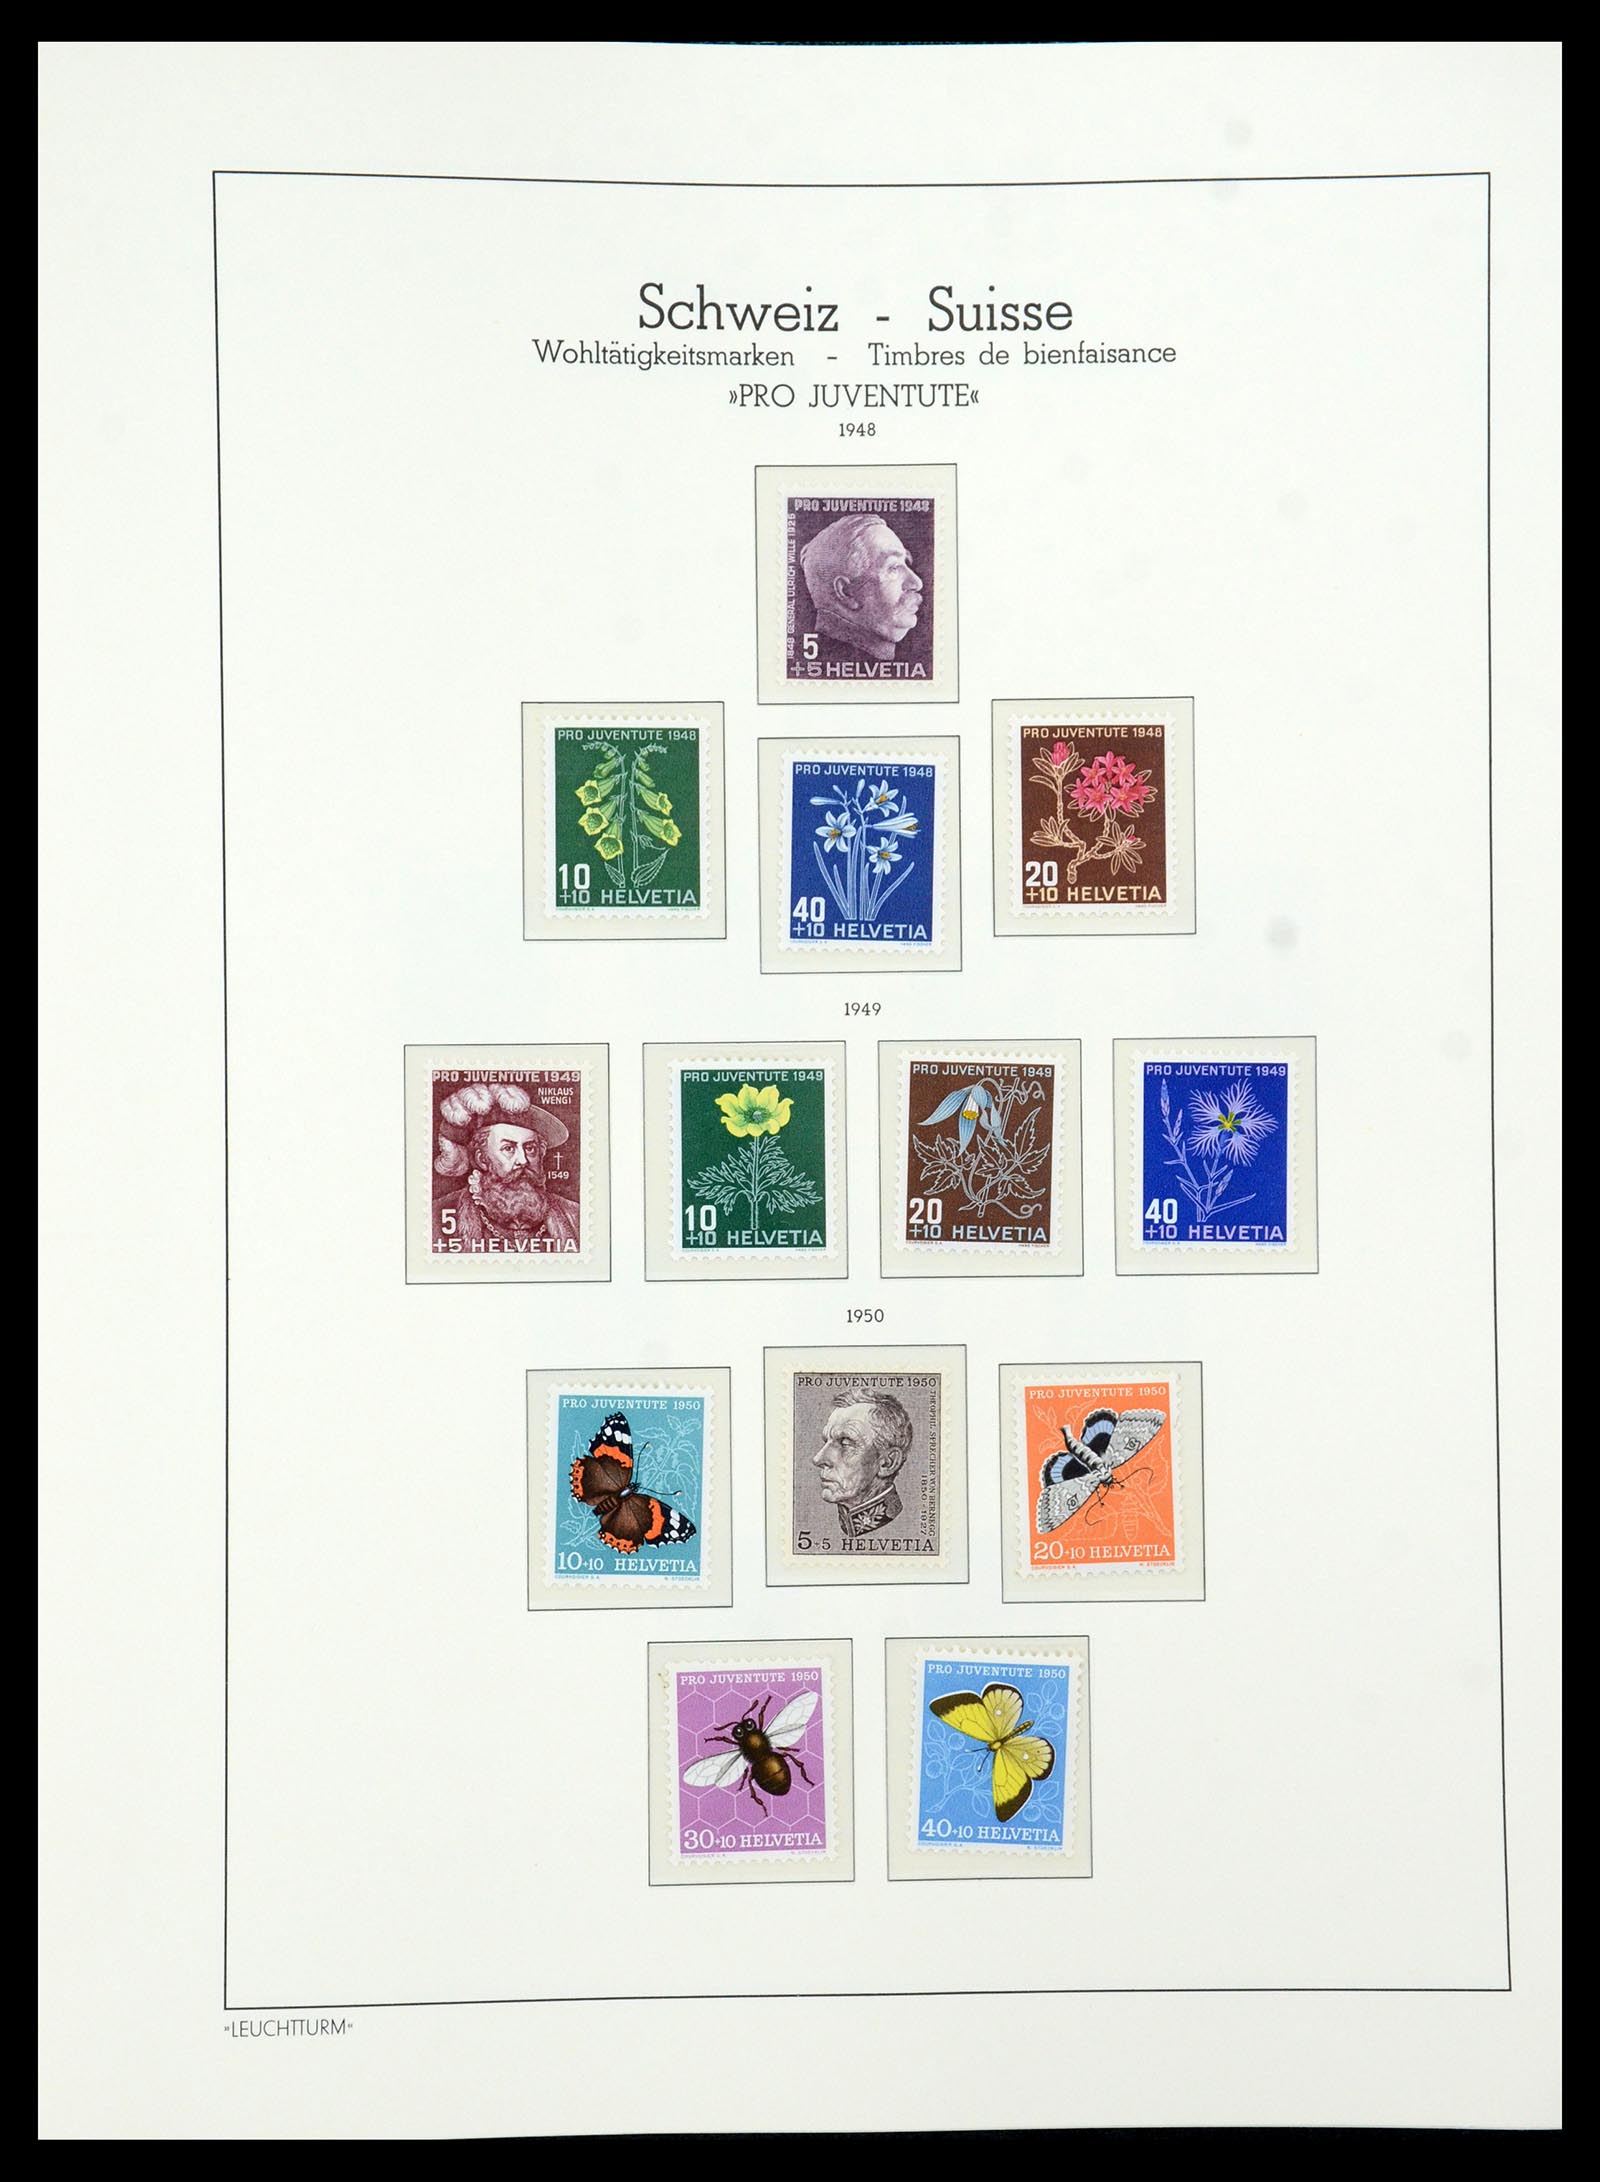 36284 060 - Stamp collection 36284 Switzerland 1854-2006.